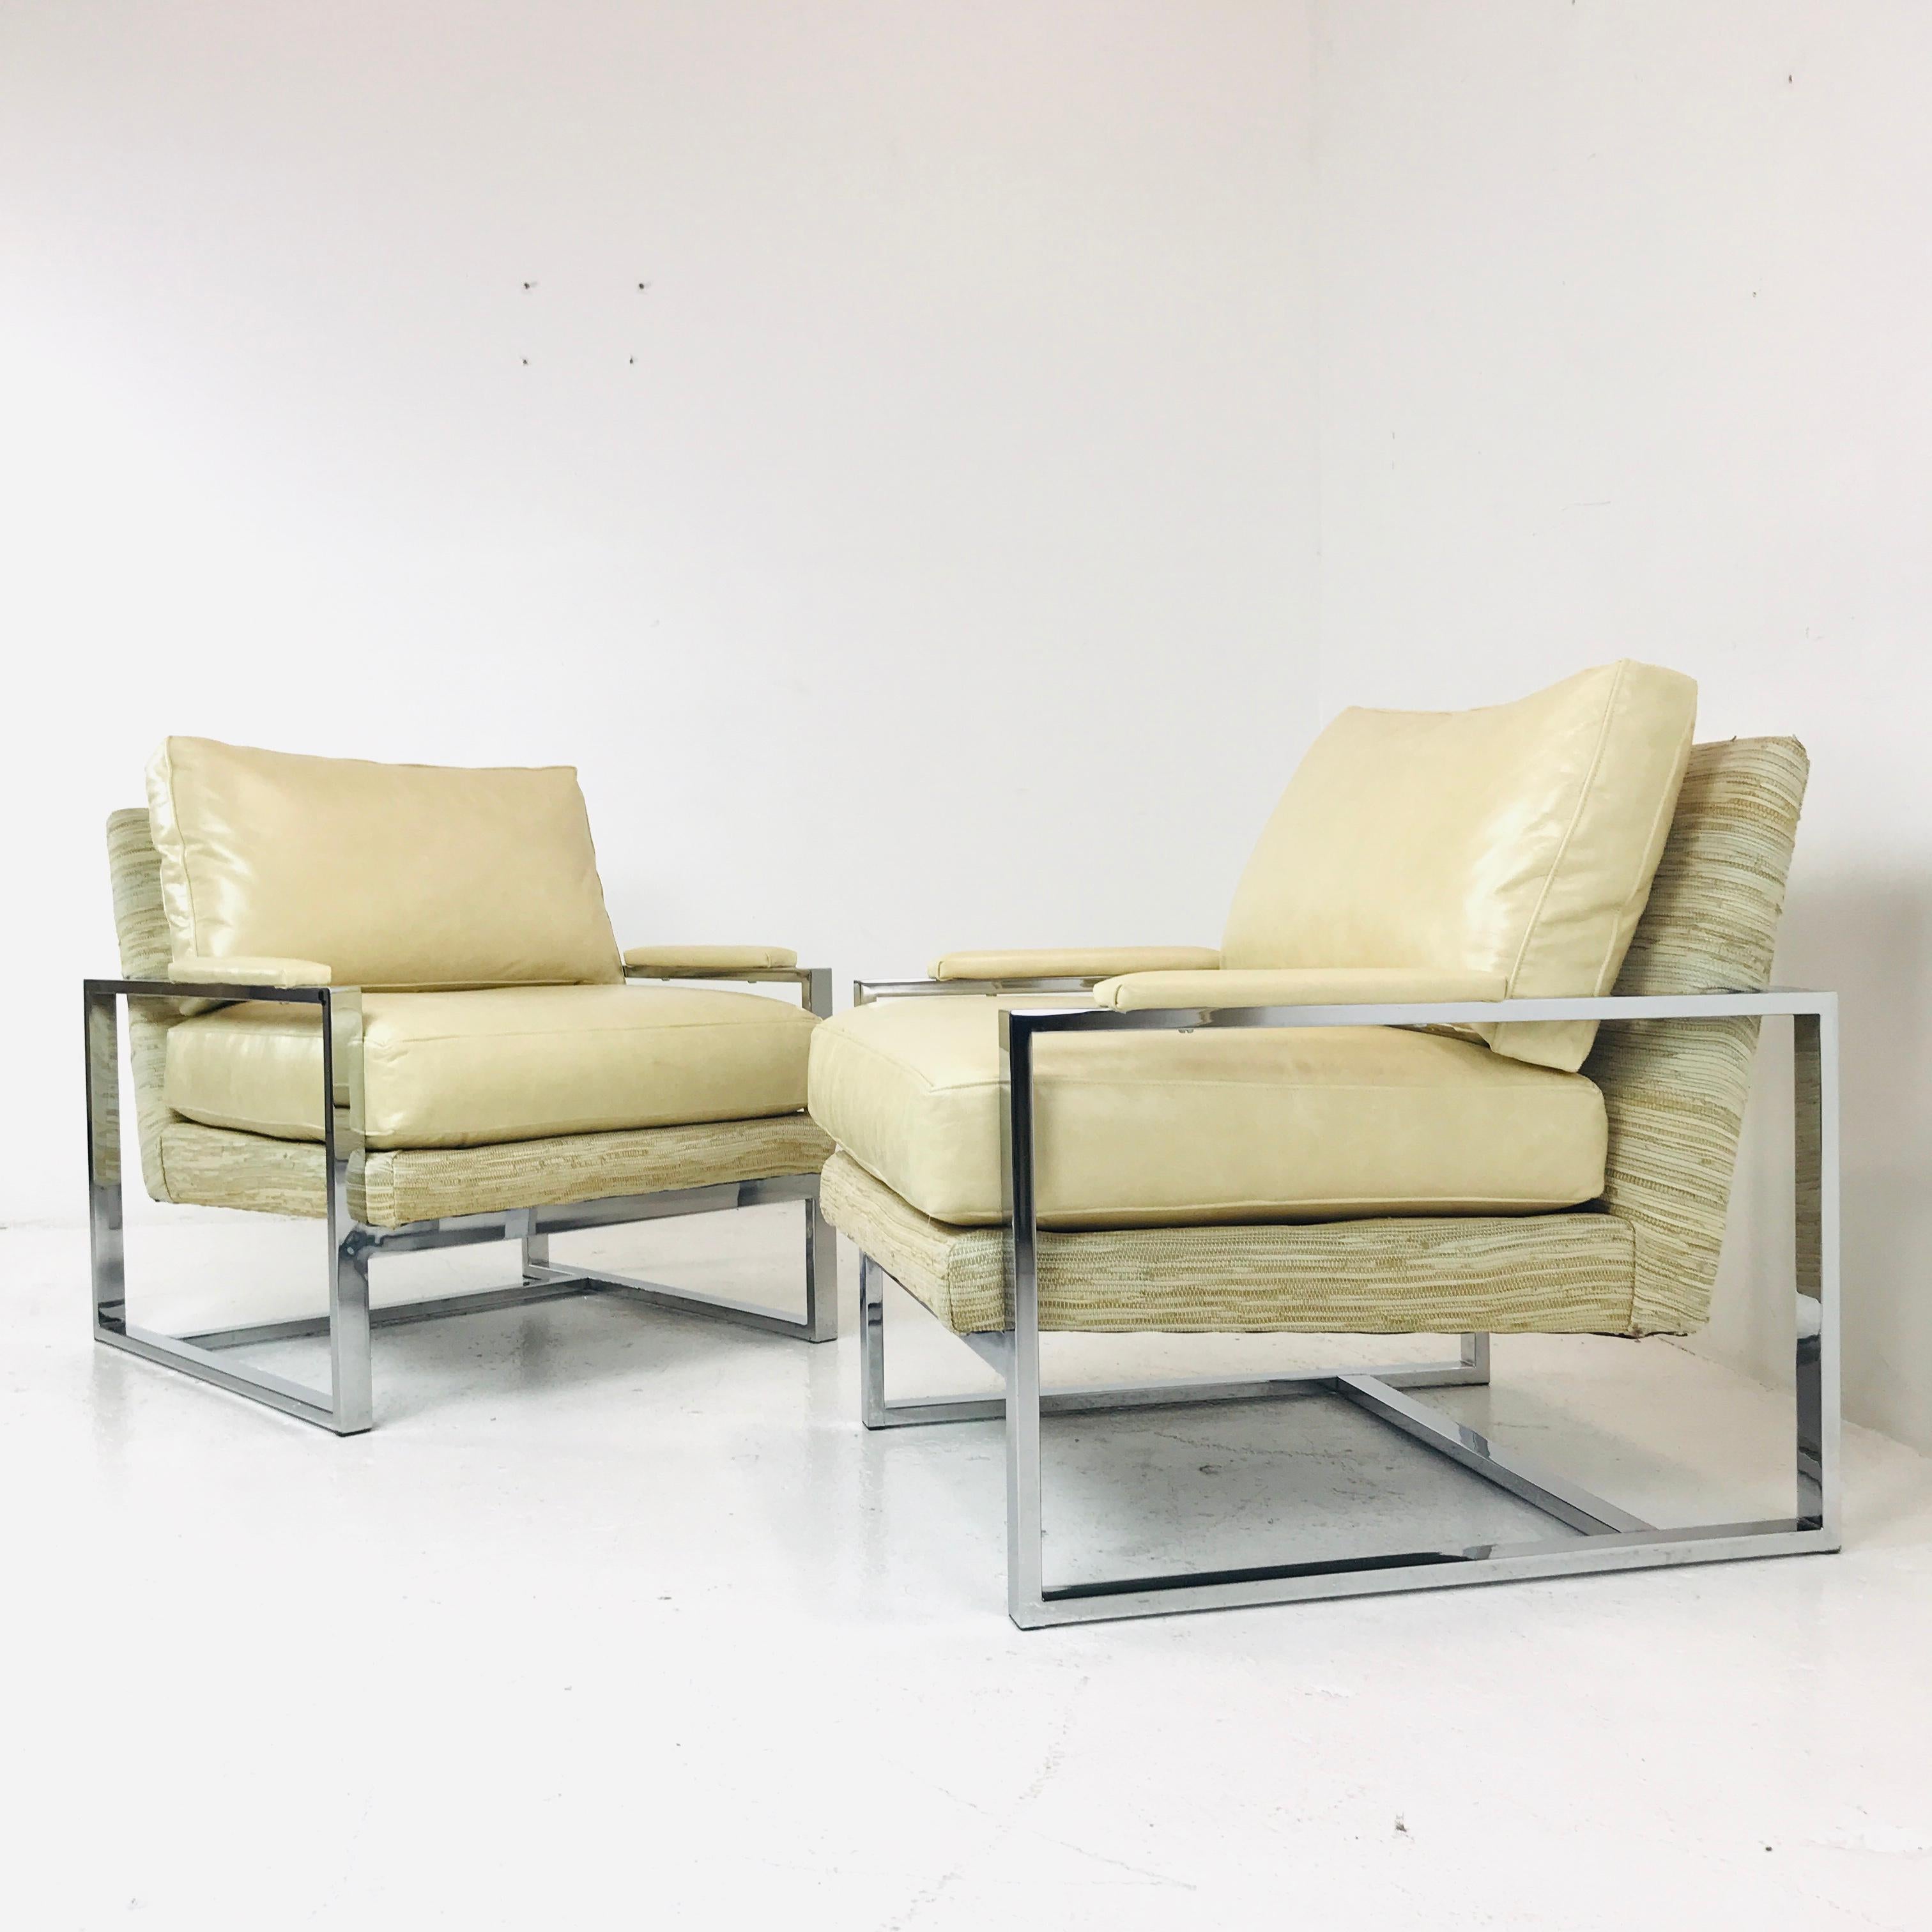 Pair of Chrome Milo Baughman Style Chairs 1